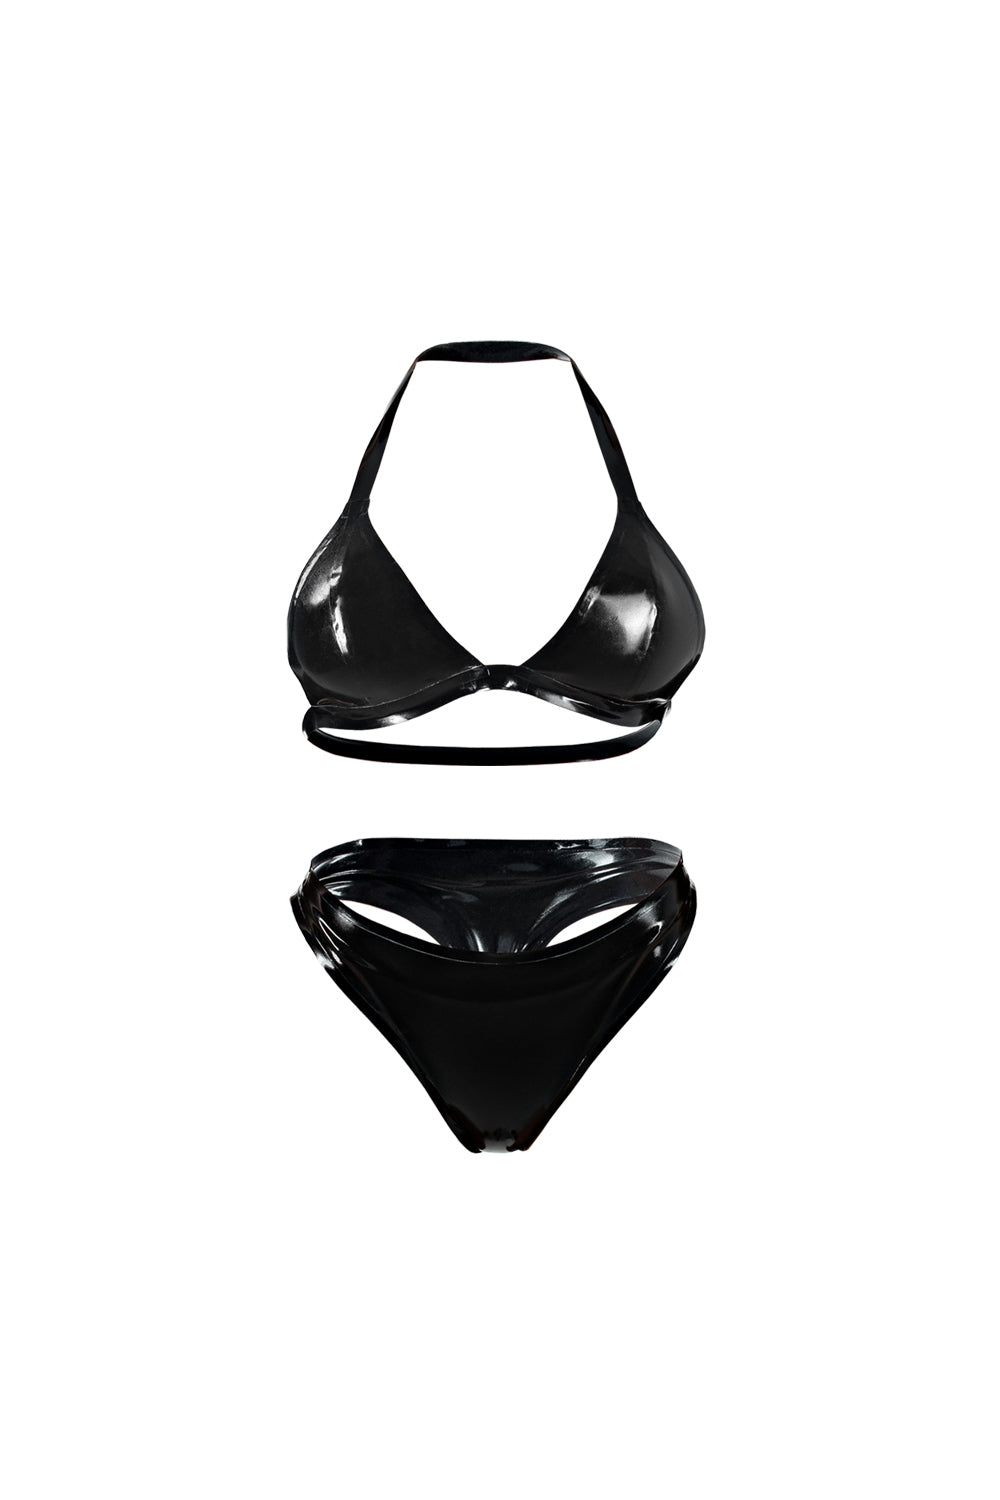 Two-pieces set of latex lingerie, latex bra, latex panties. Black